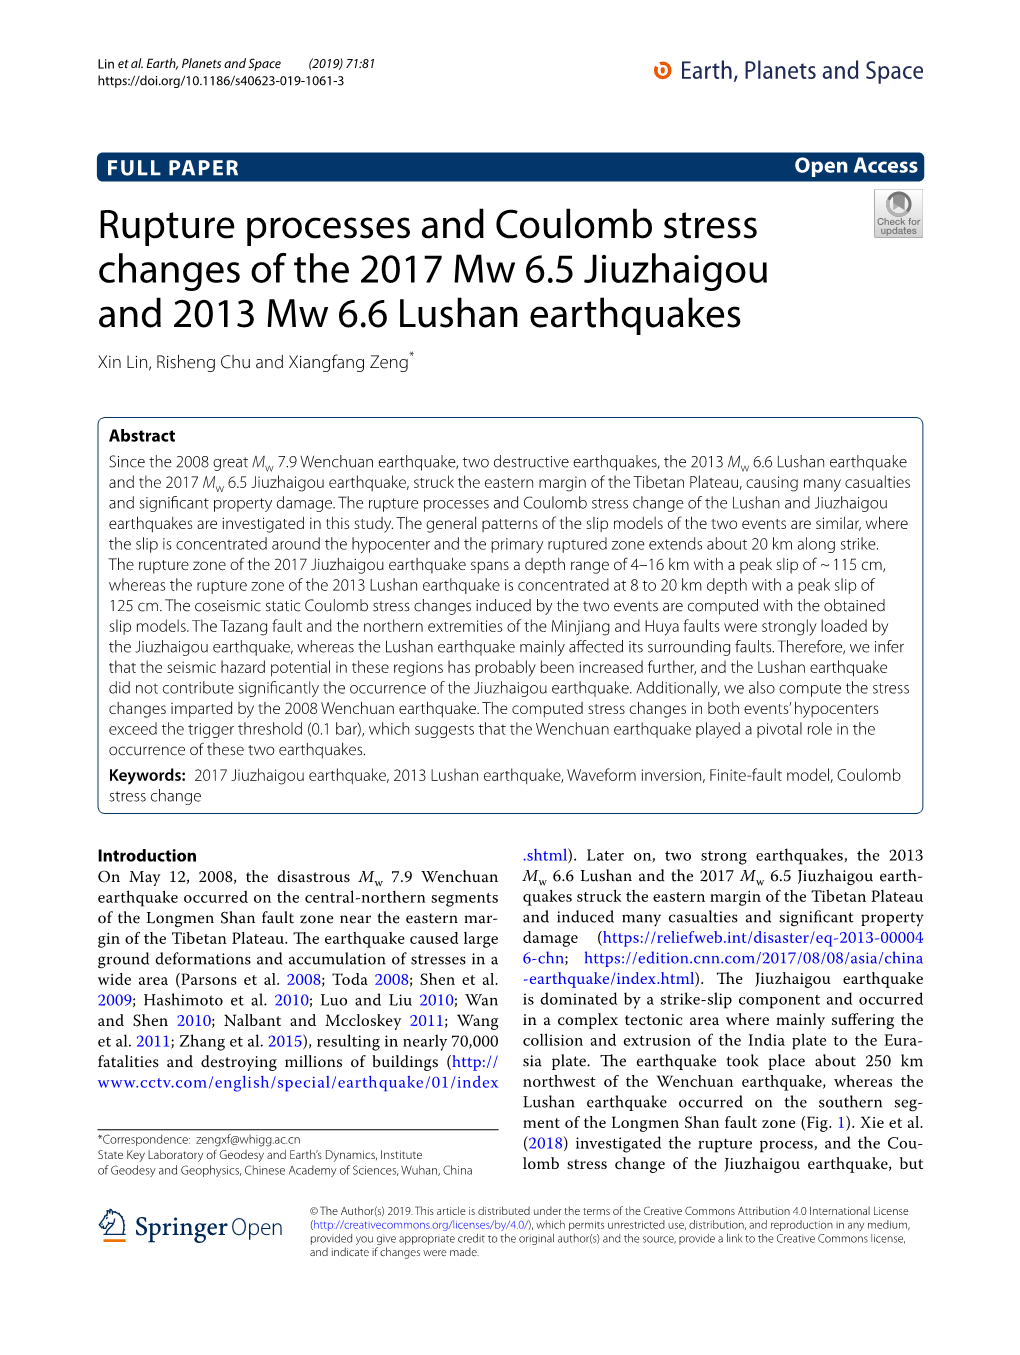 Rupture Processes and Coulomb Stress Changes of the 2017 Mw 6.5 Jiuzhaigou and 2013 Mw 6.6 Lushan Earthquakes Xin Lin, Risheng Chu and Xiangfang Zeng*